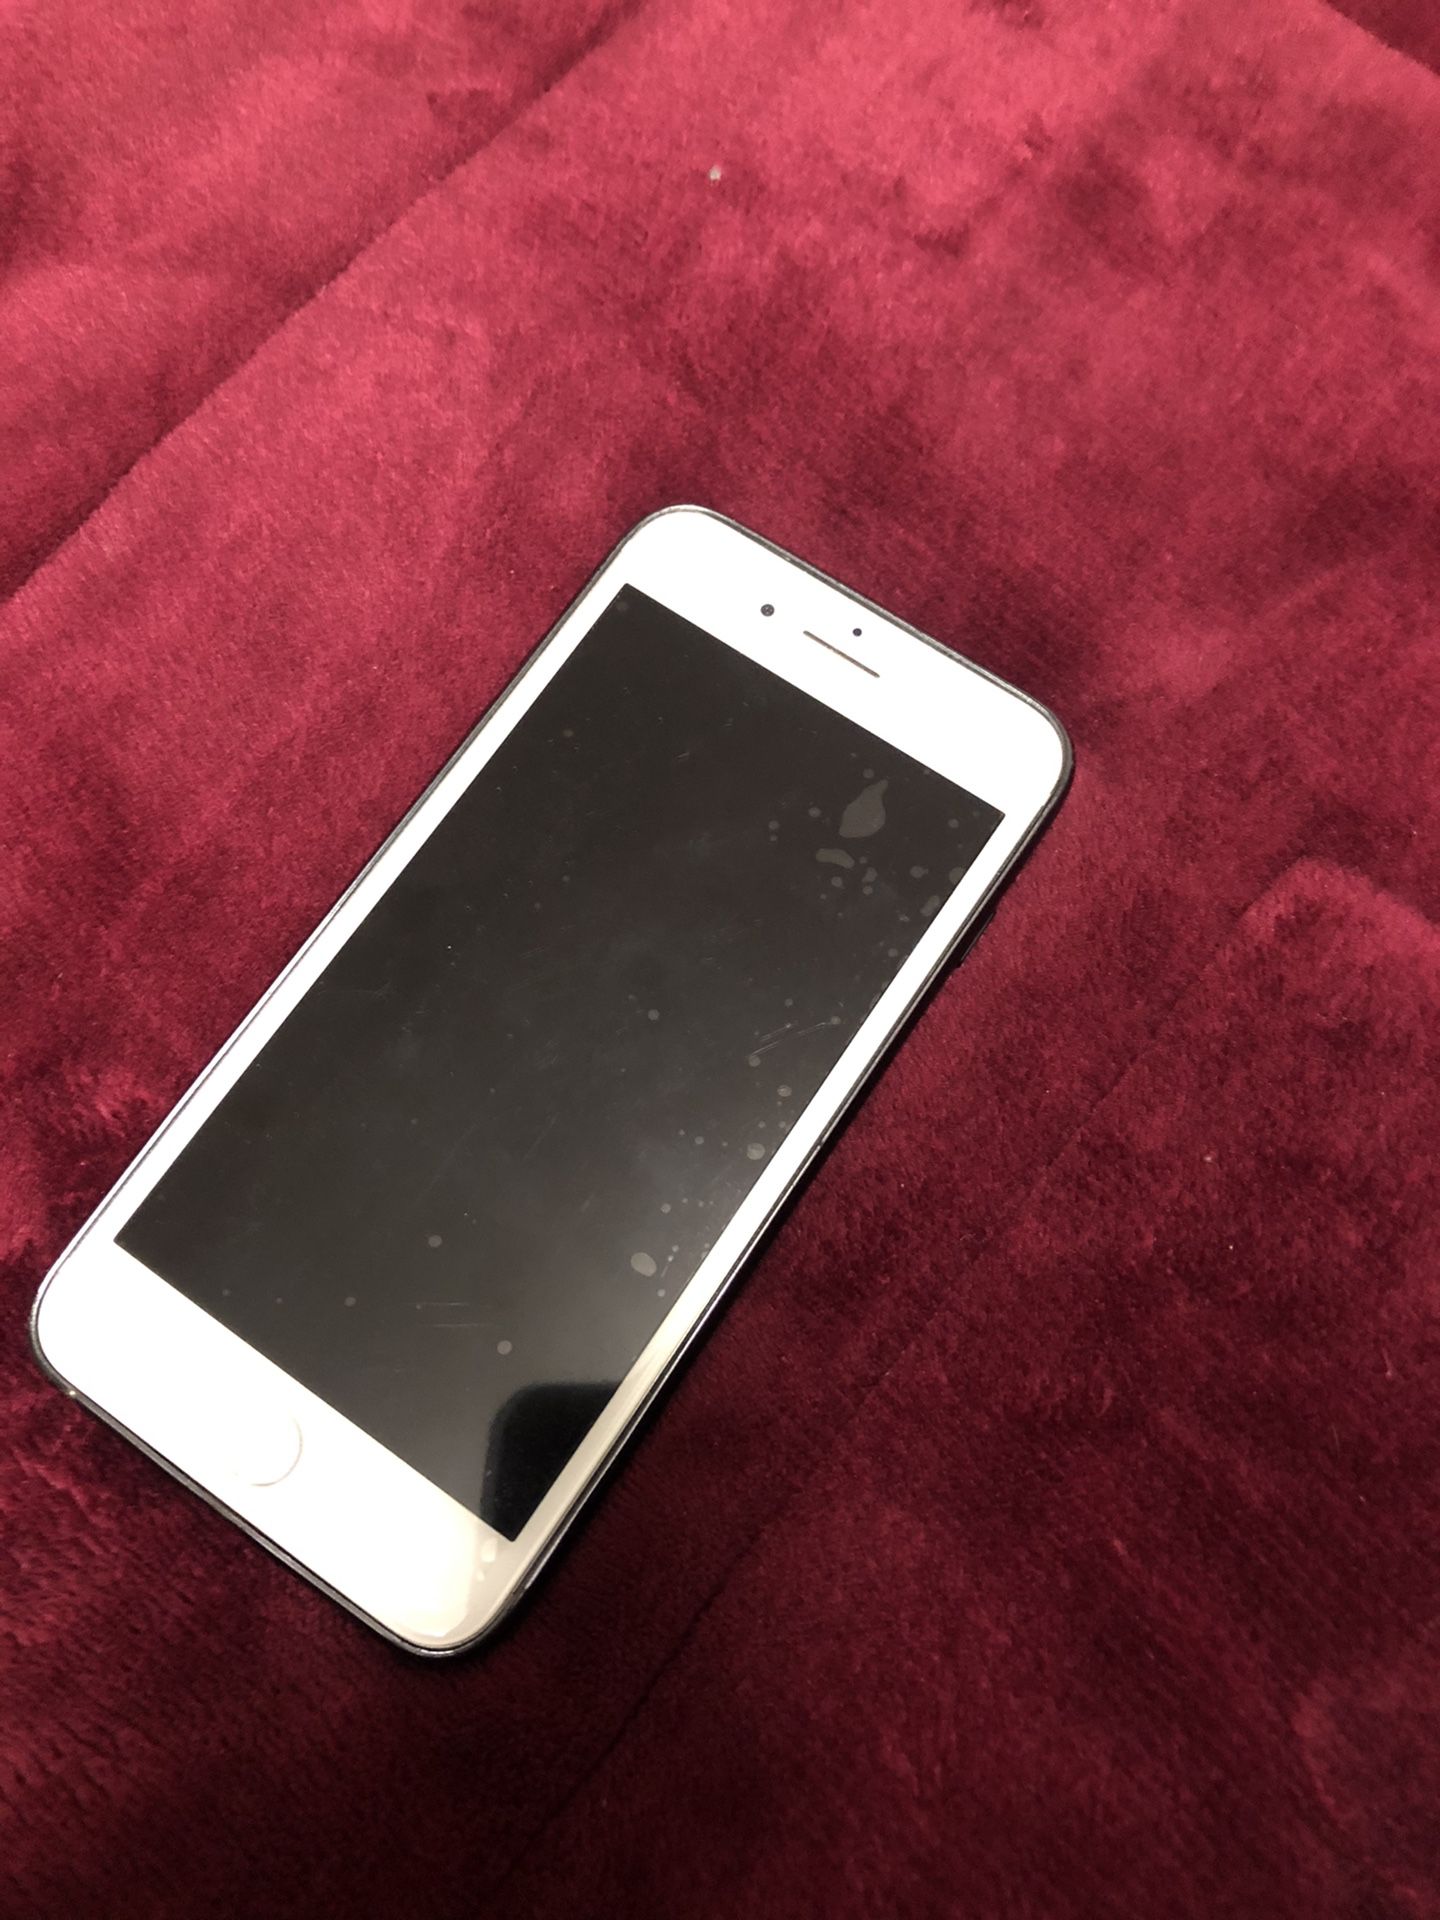 iPhone 7 Plus, 128 g. Grey unlocked